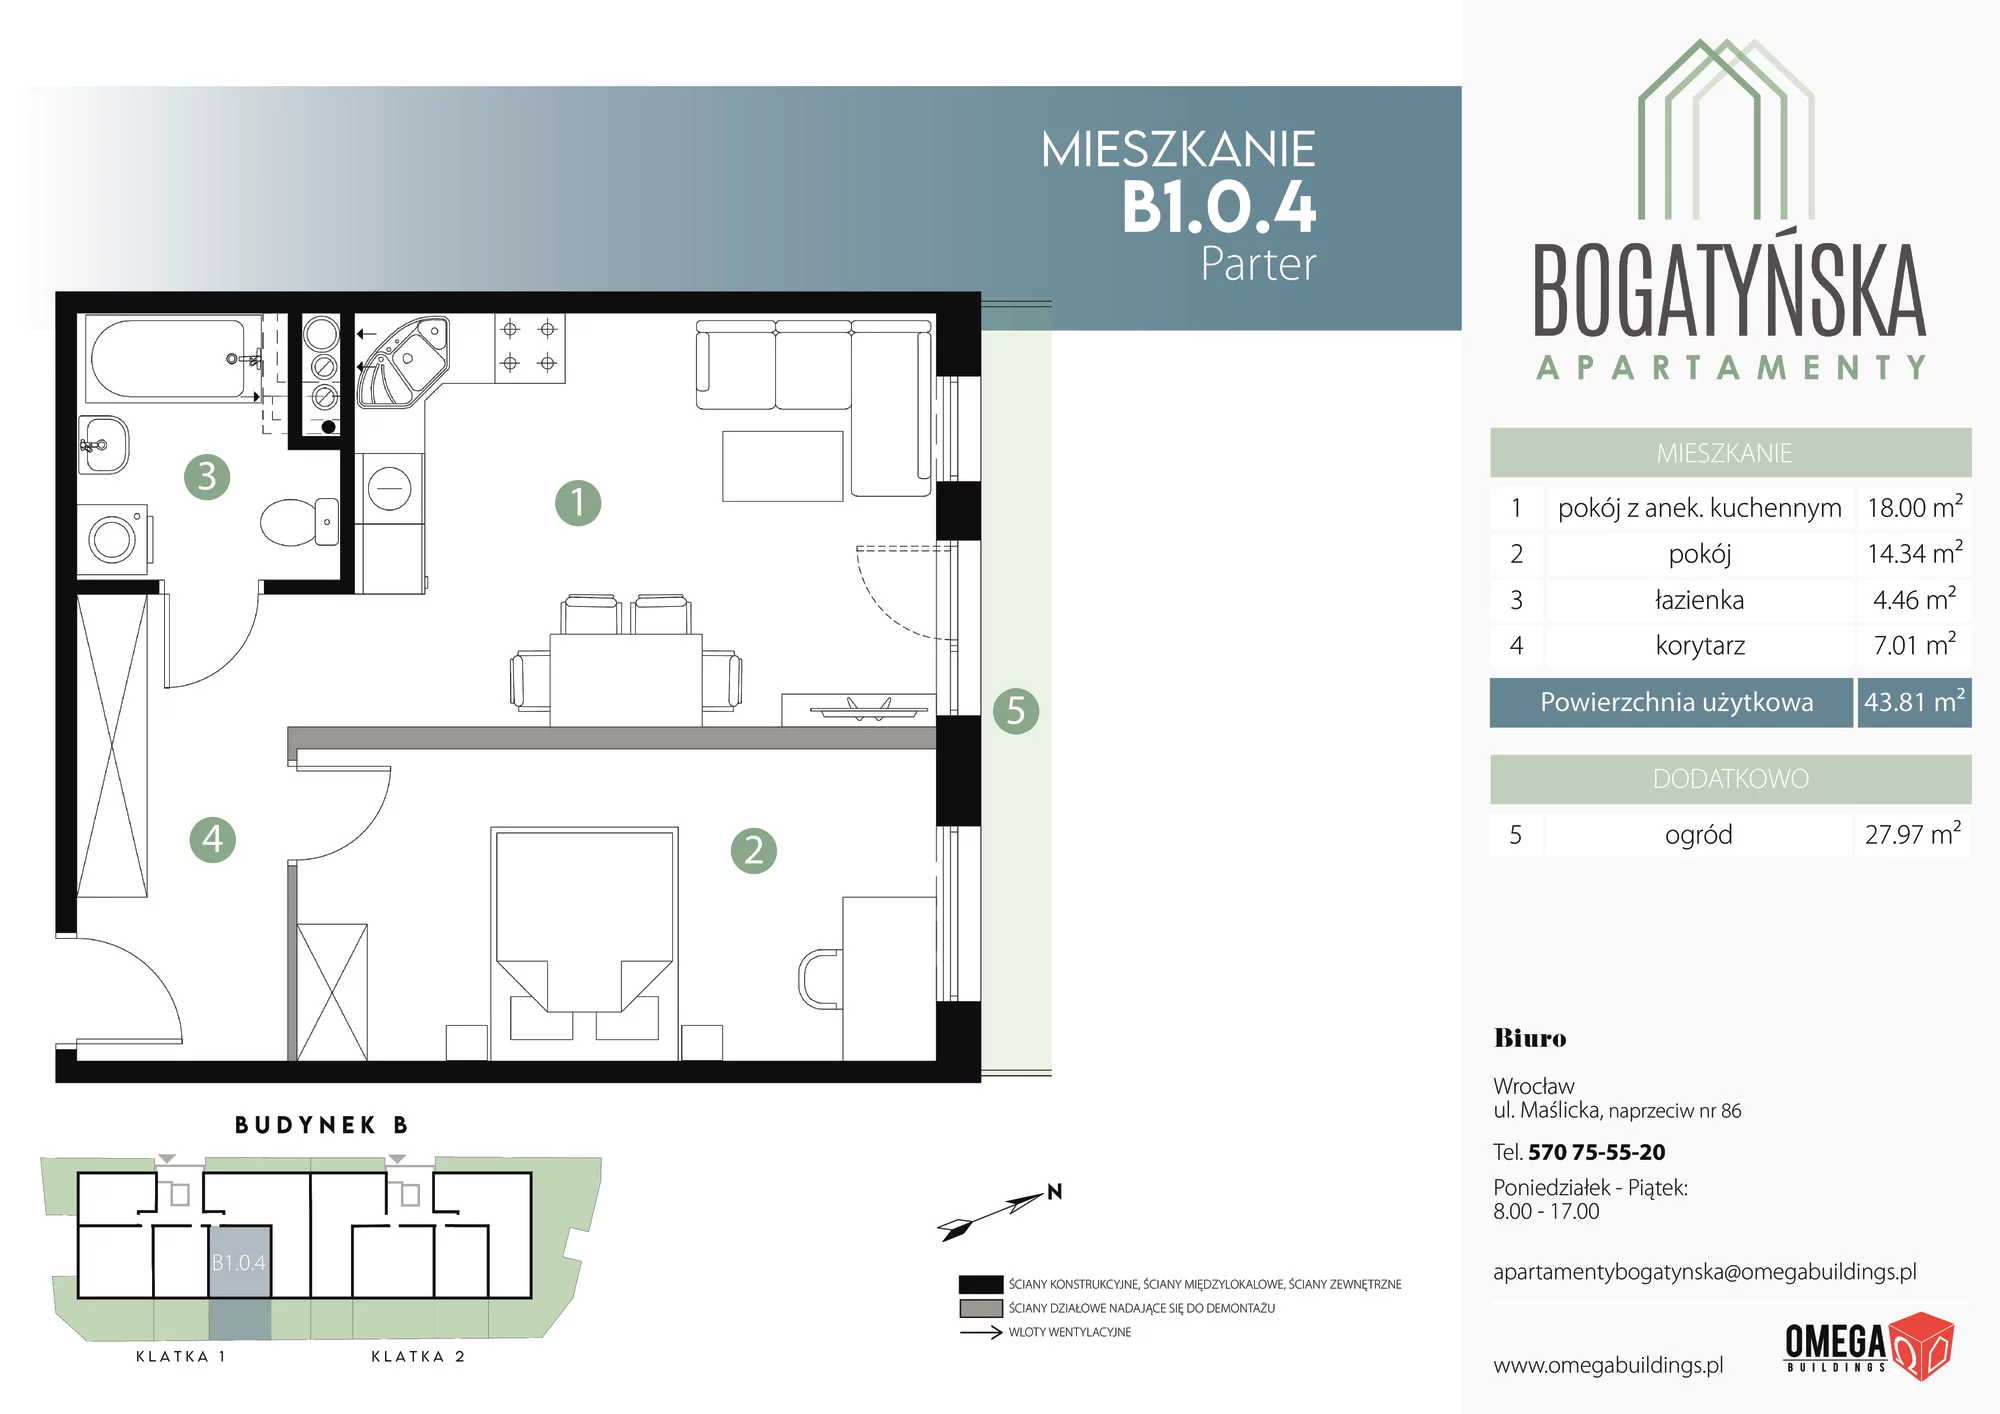 Apartament 43,81 m², parter, oferta nr B1.0.4, Bogatyńska Apartamenty, Wrocław, Maślice, Fabryczna, ul. Bogatyńska